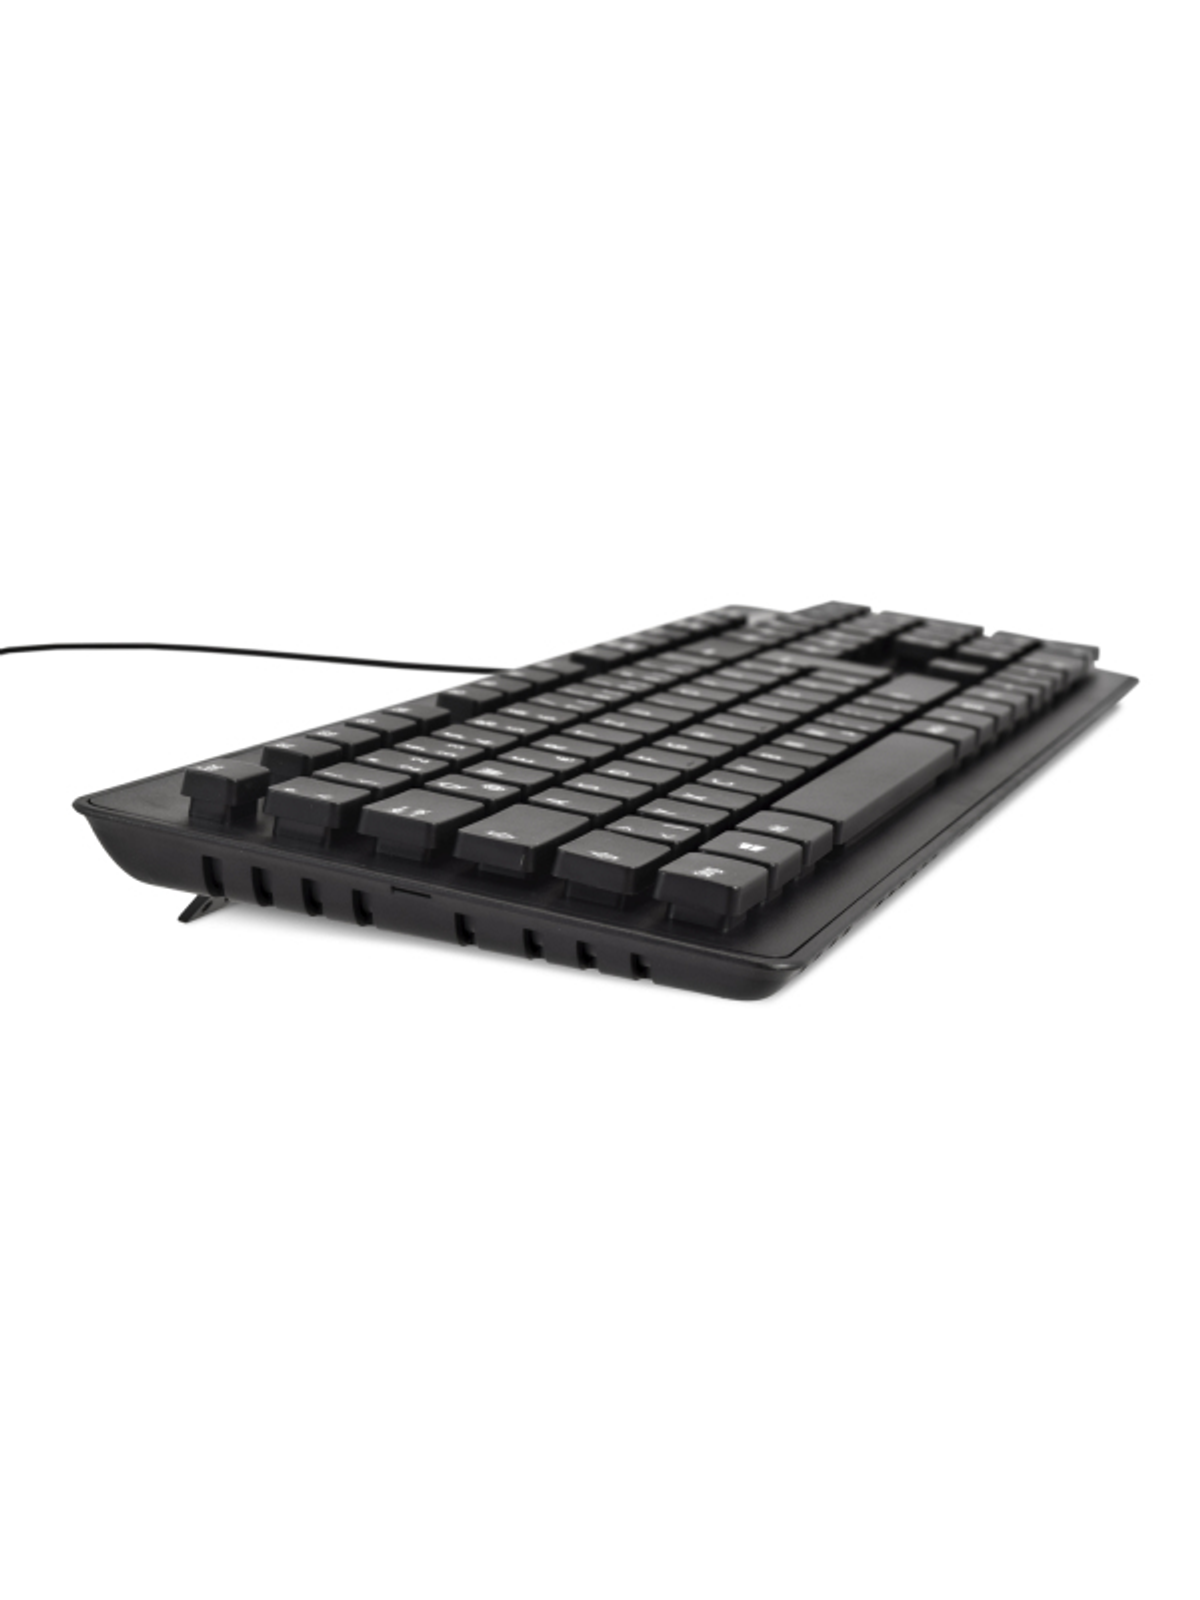 Tastatur Maus V7 Set, Schwarz CKU700DE,